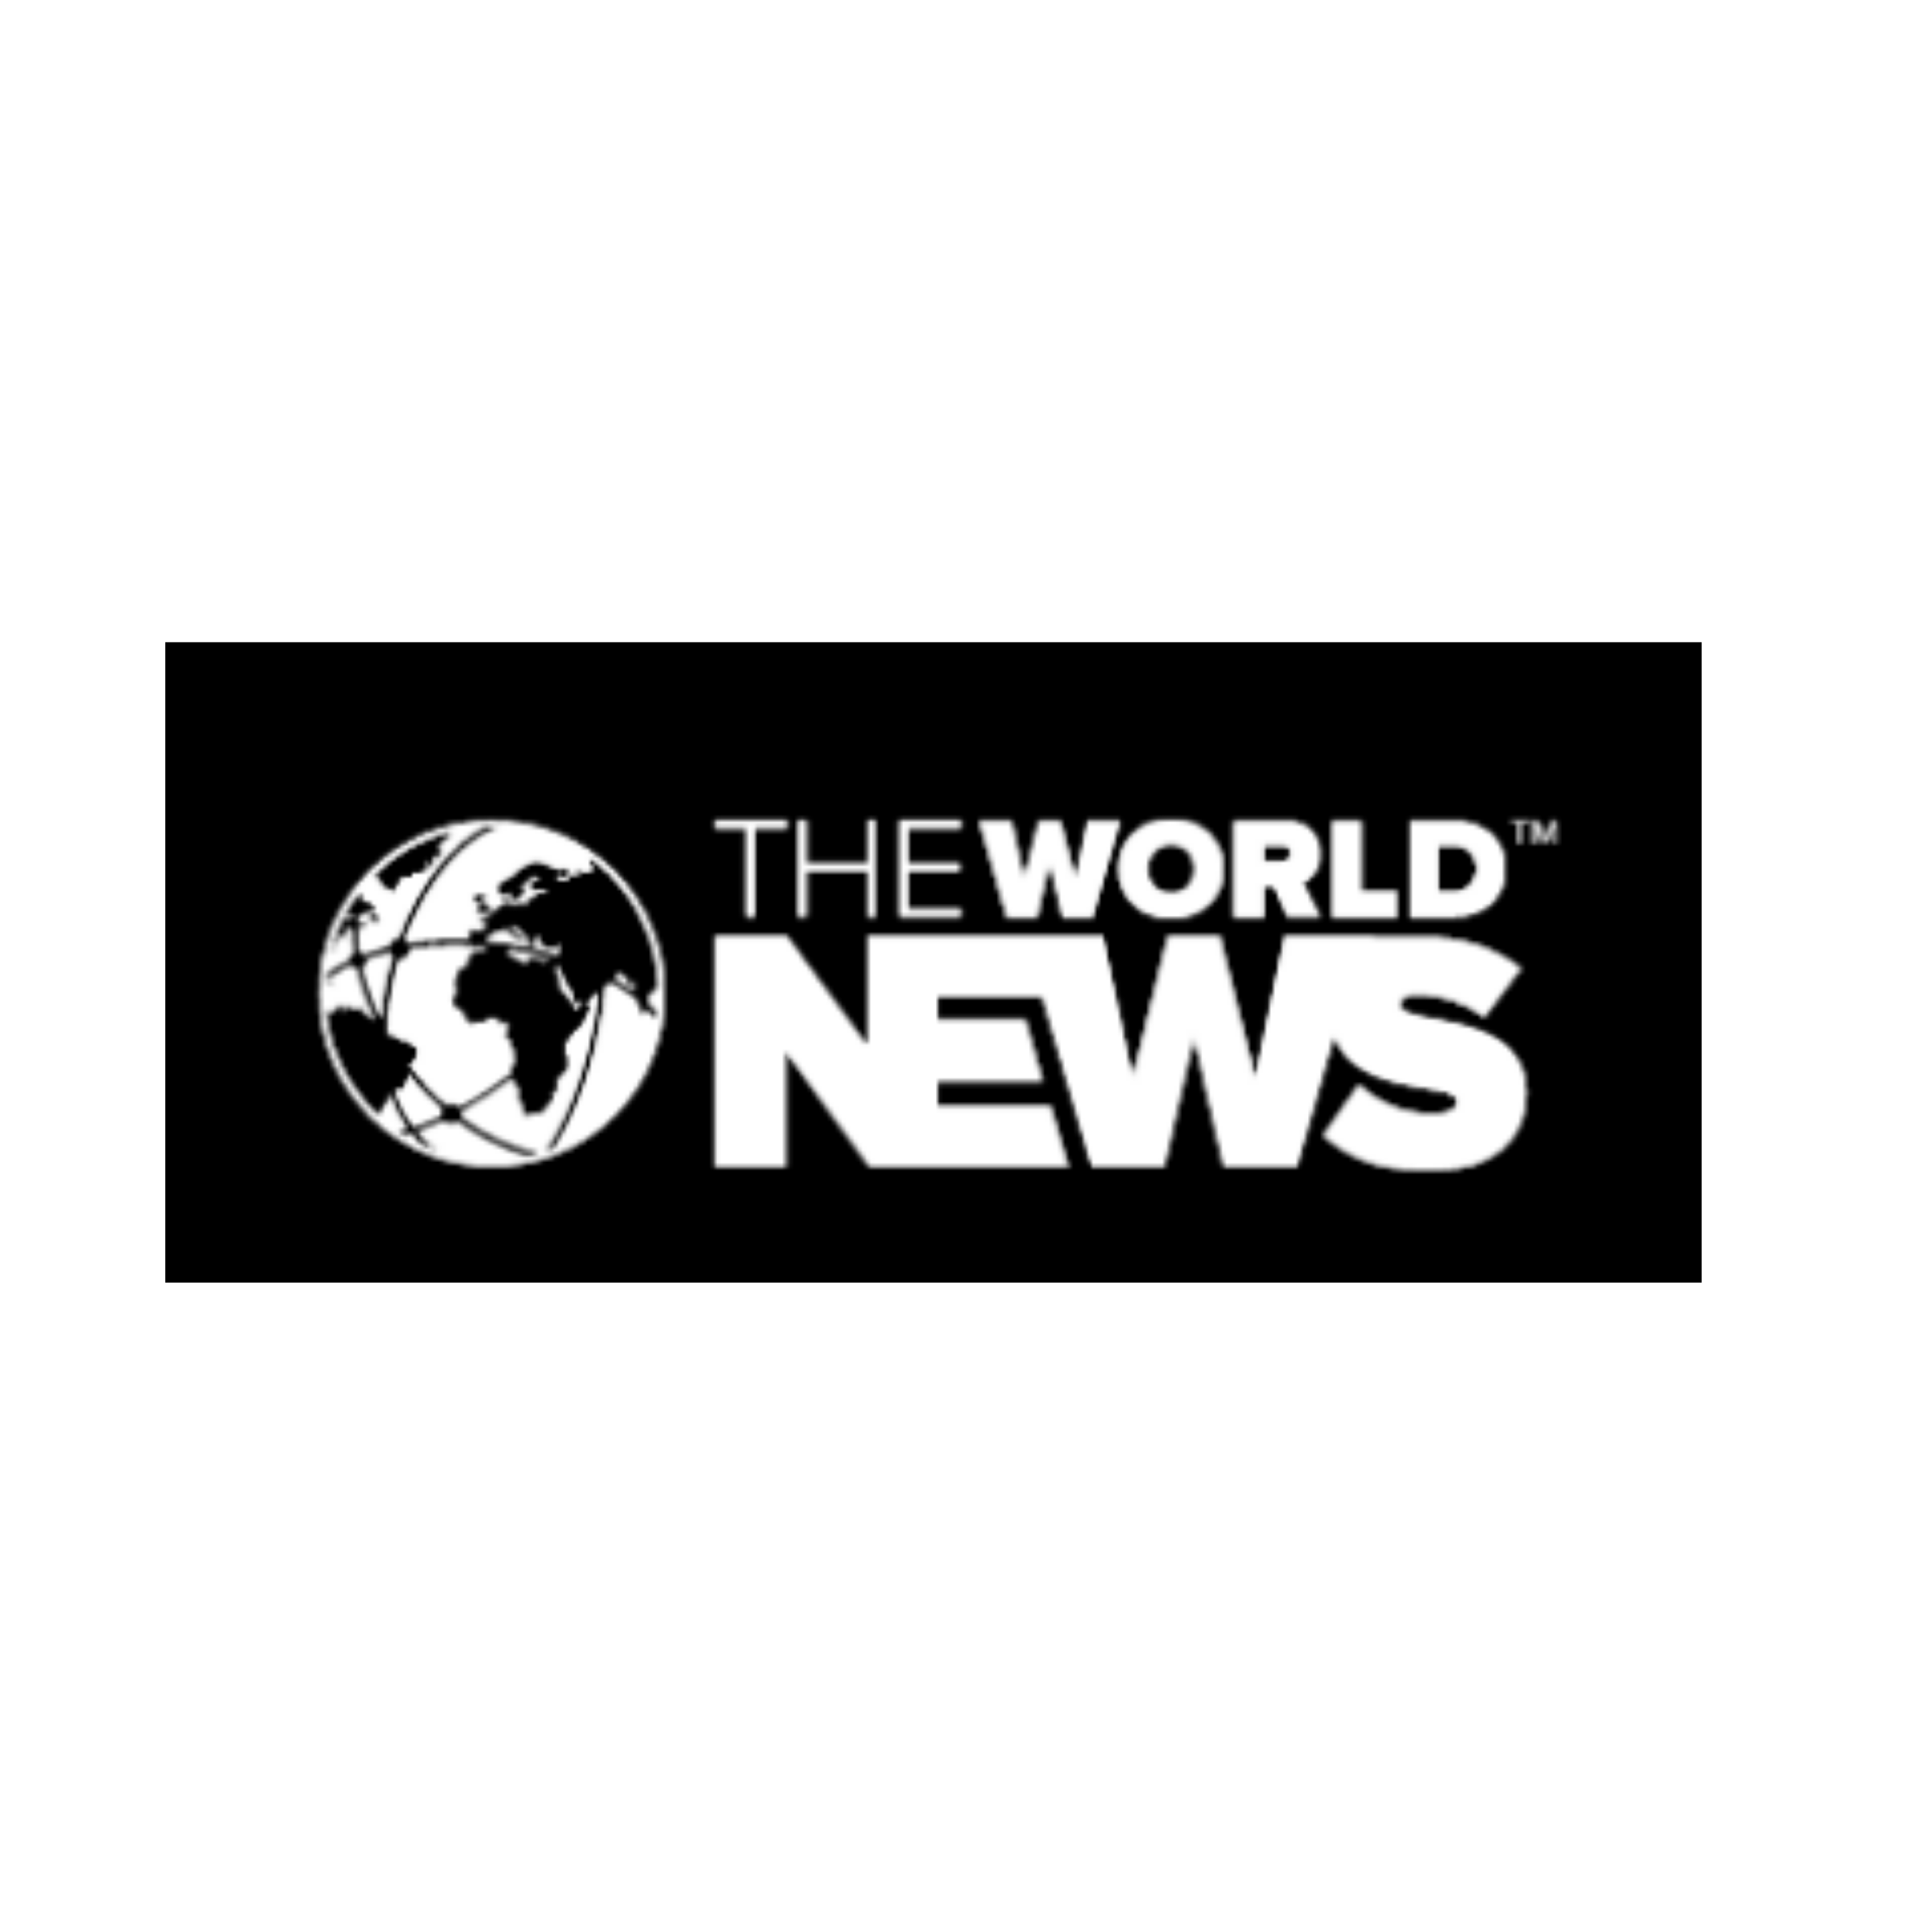 The world news